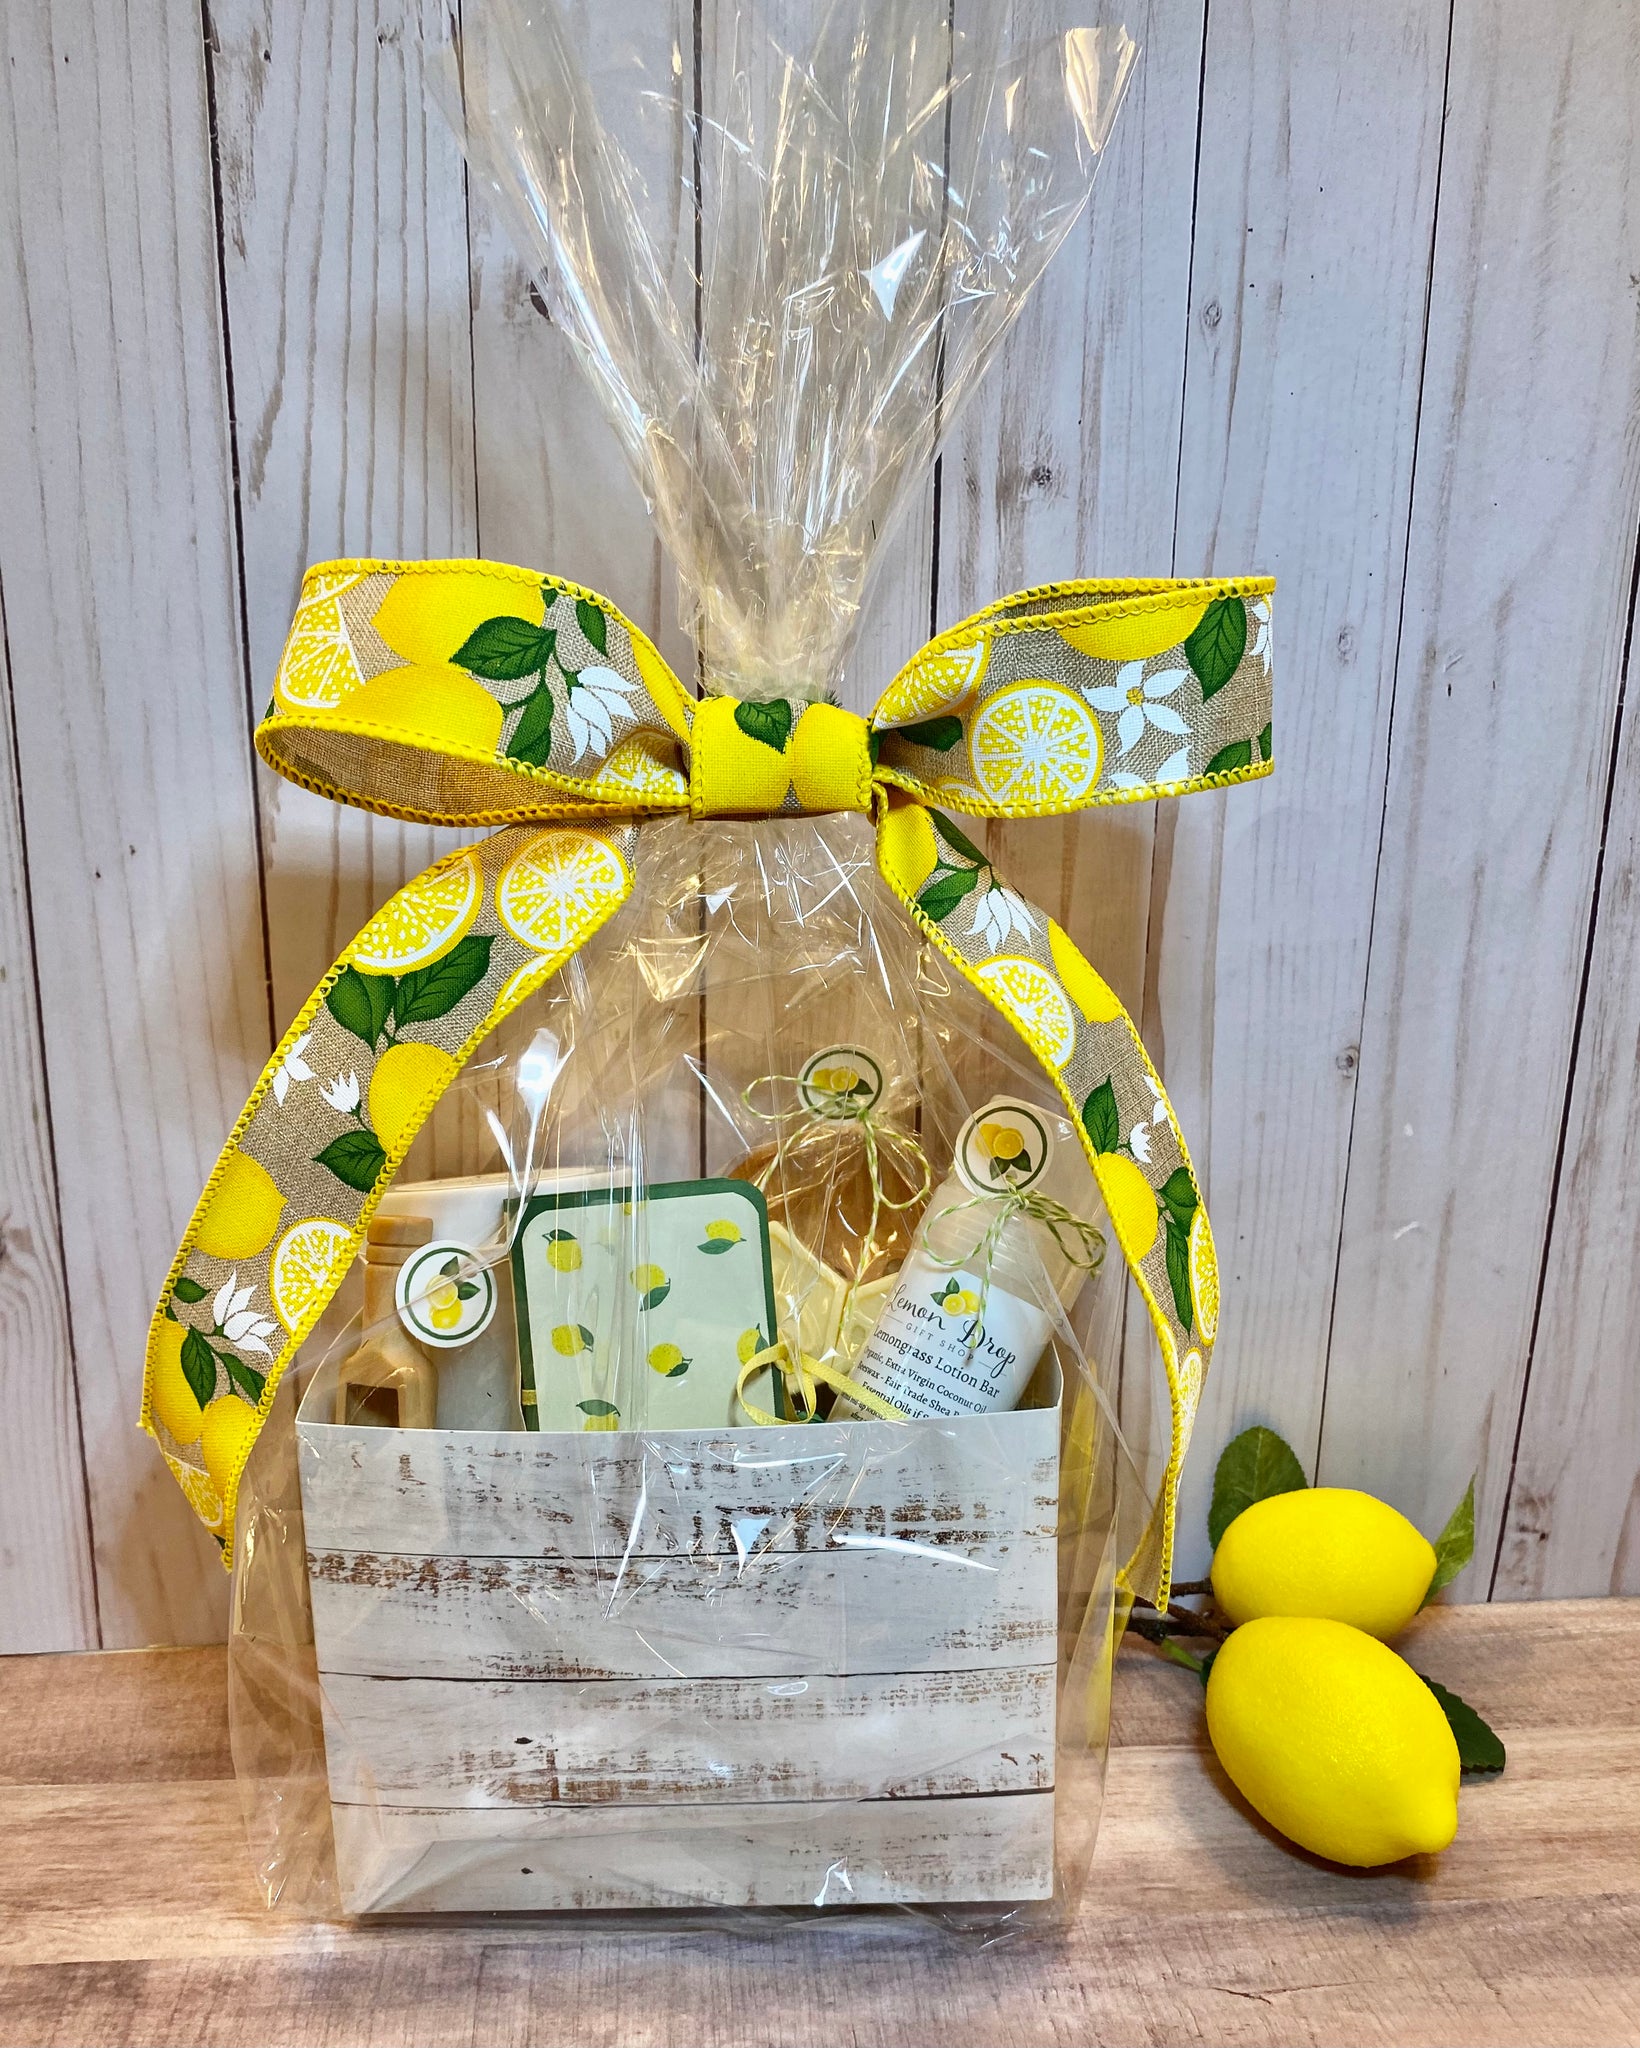 Sunflower Gift Set – Lemon Drop Gift Shop